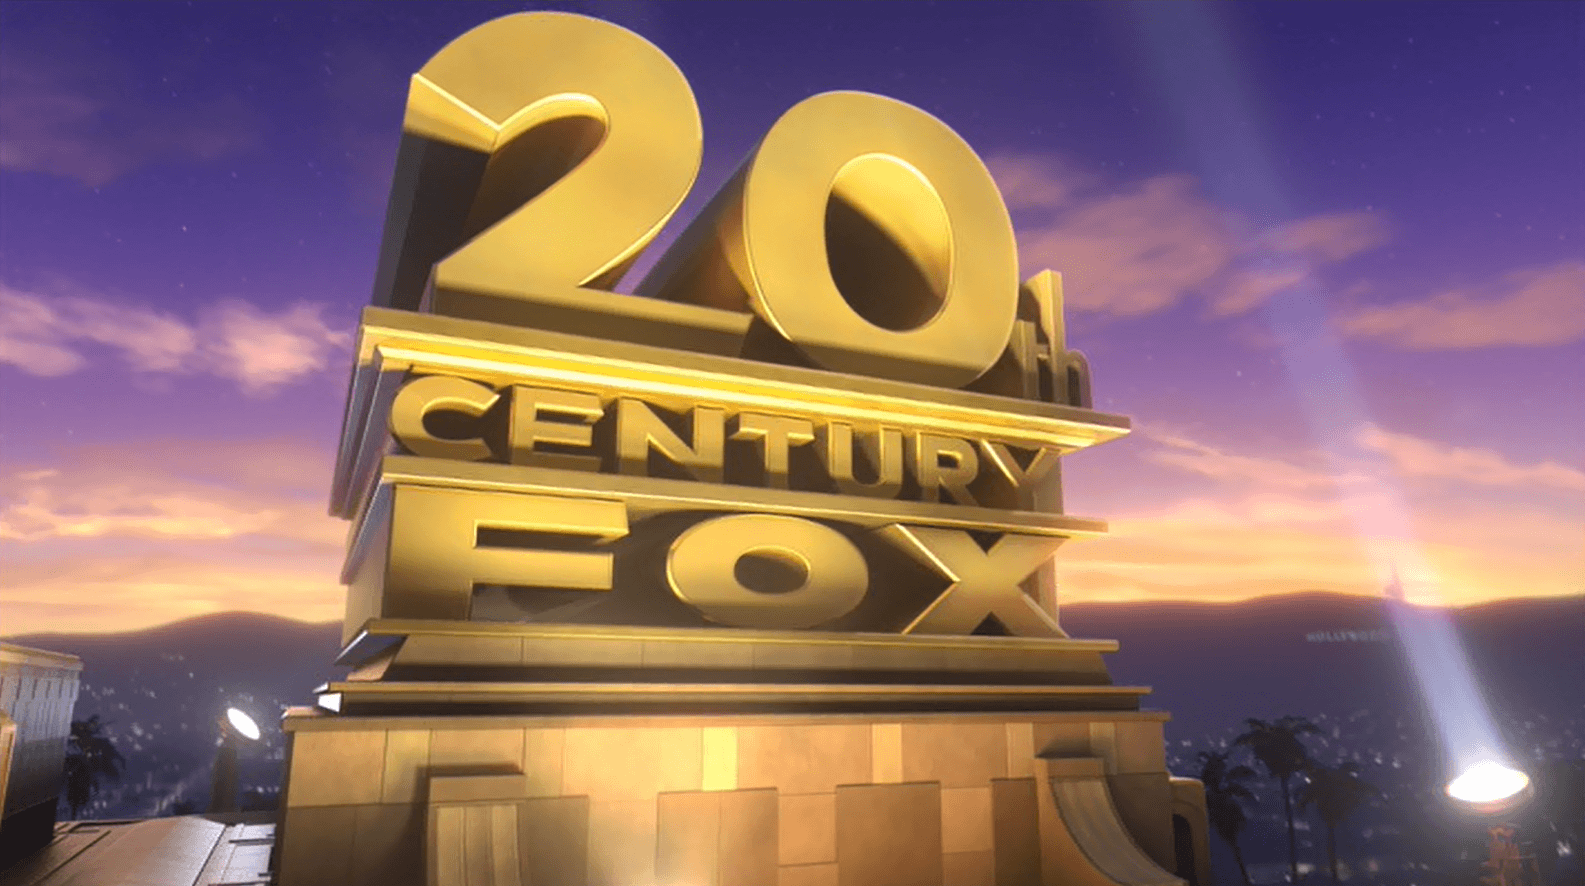 20th Century Fox Logo - 20th Century Fox | The Chronicles of Narnia Wiki | FANDOM powered by ...